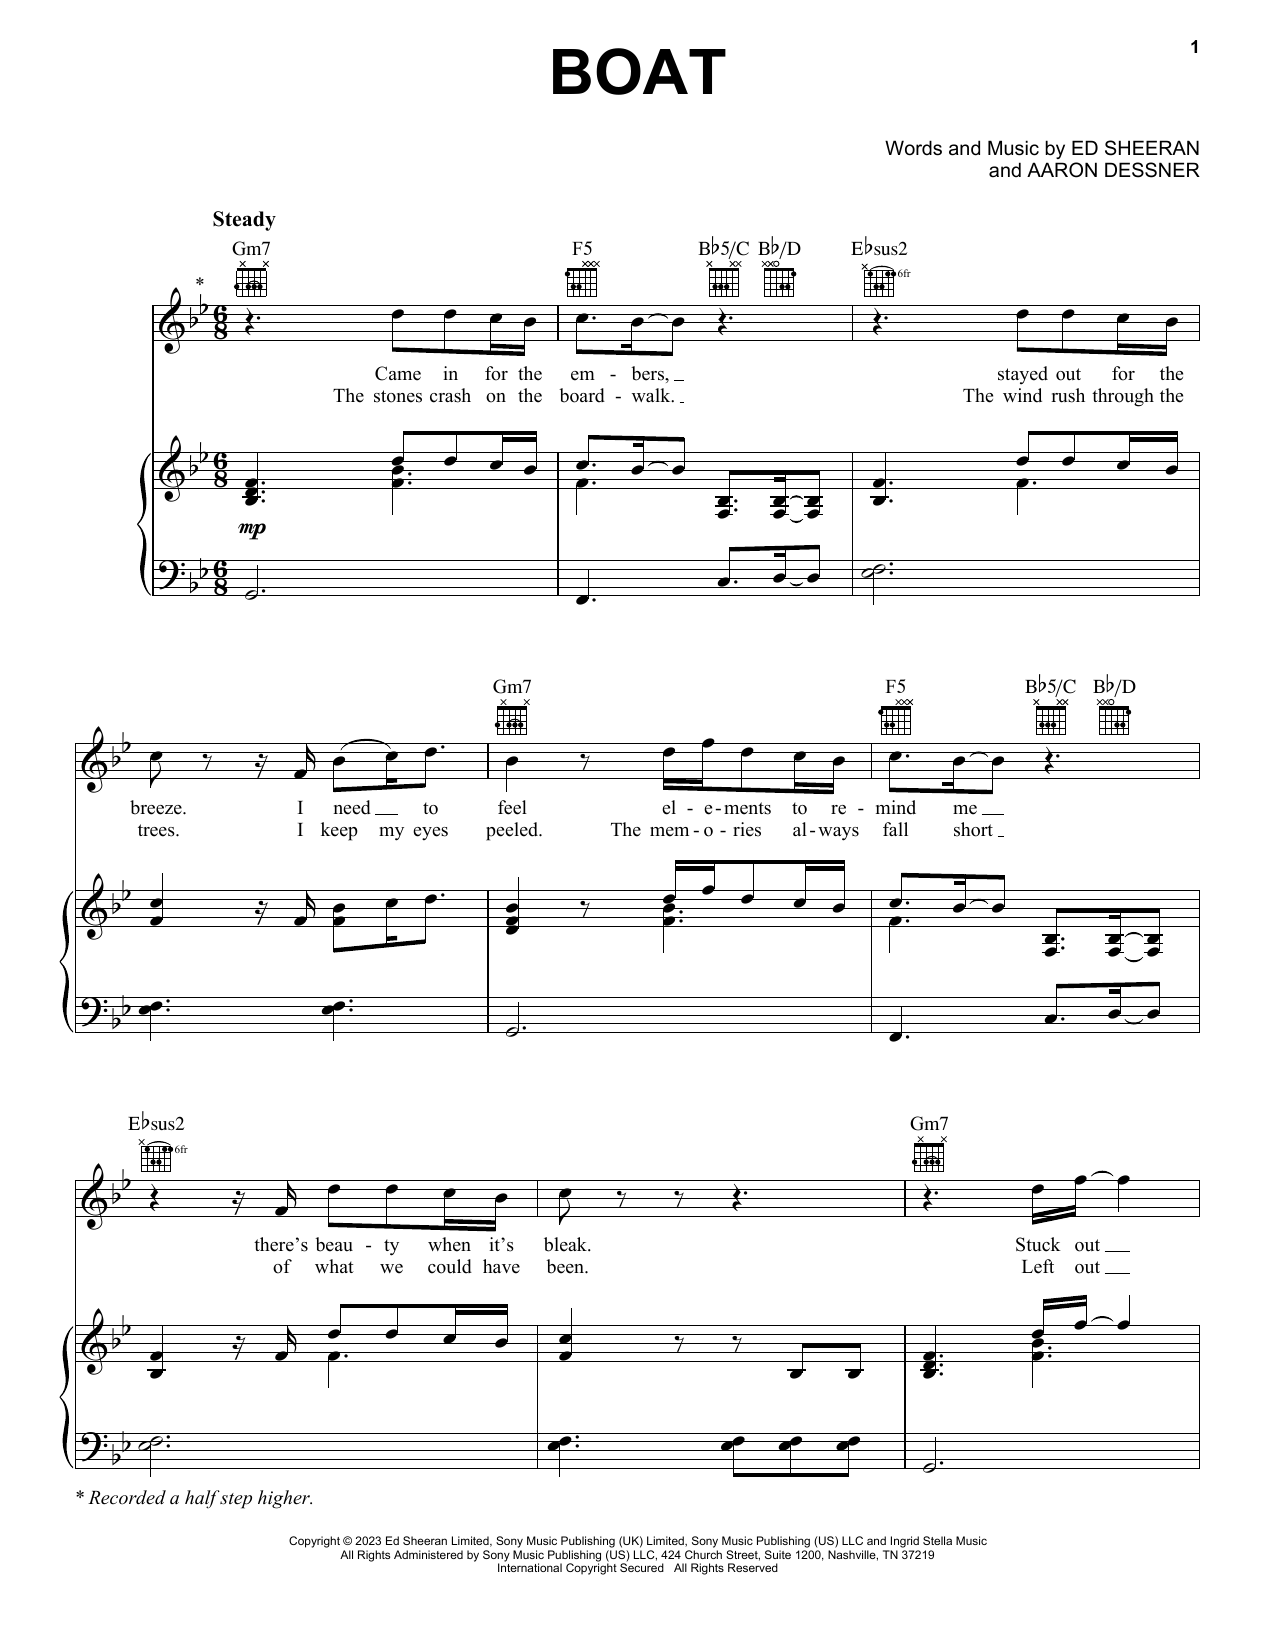 Ed Sheeran Boat Sheet Music Notes & Chords for Piano, Vocal & Guitar Chords (Right-Hand Melody) - Download or Print PDF